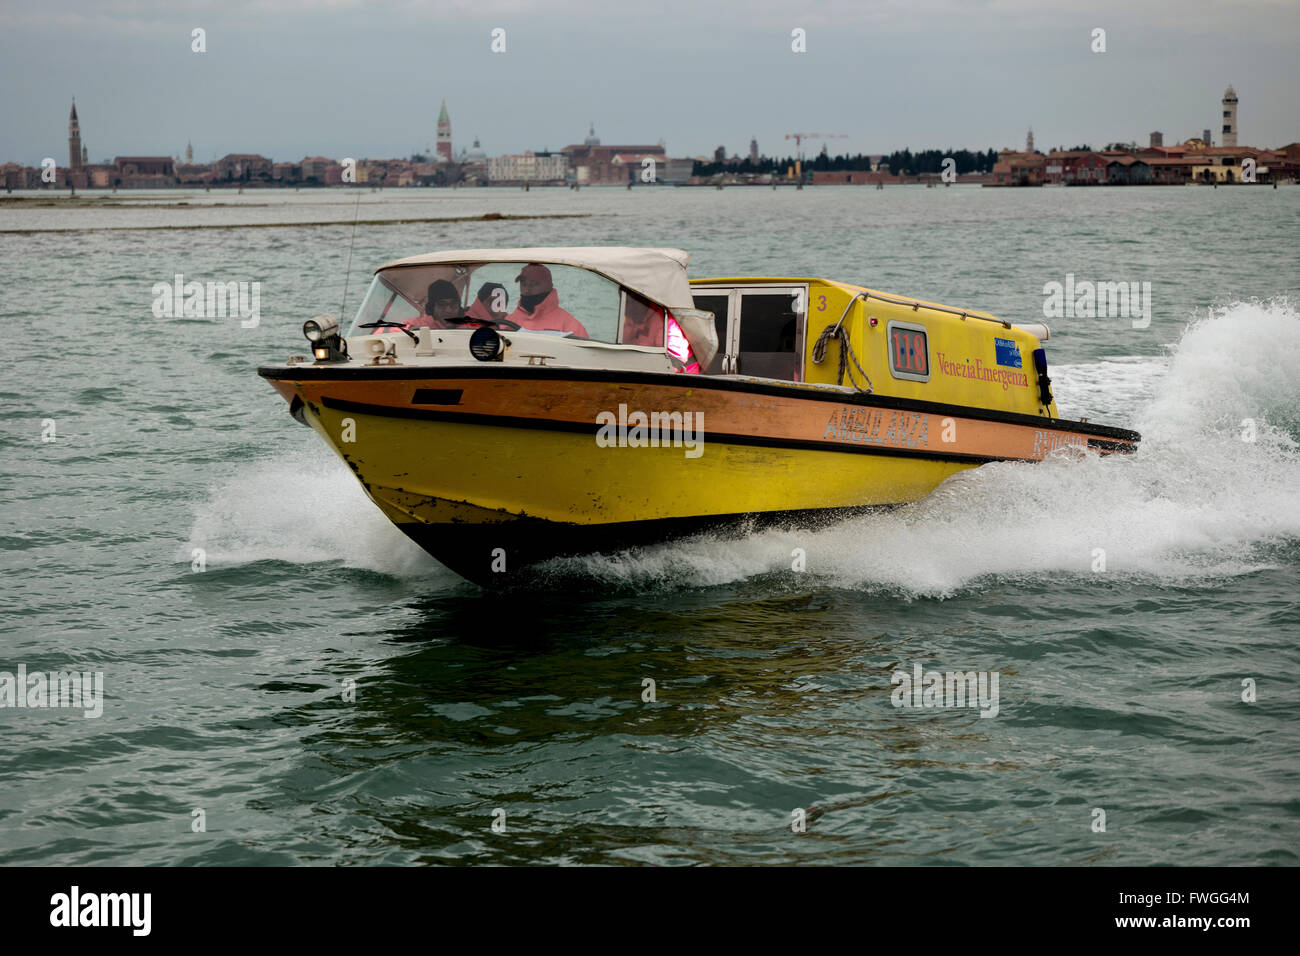 Water ambulance at speed on the Venice lagoon, Italy. Stock Photo